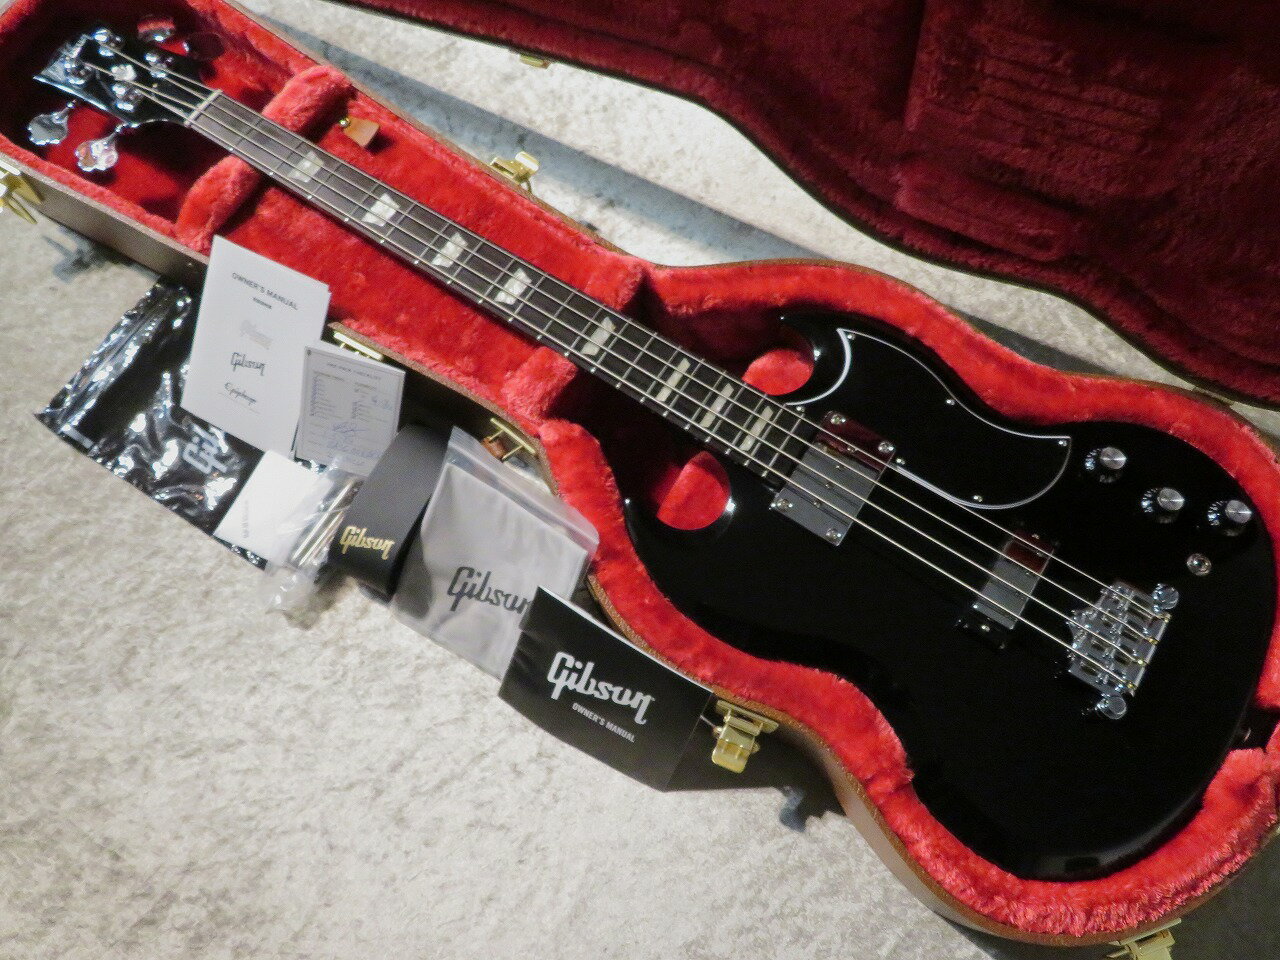 Gibson 【漆黒の良指板!!】SG Standard Bass -Black- #231130260 【軽量3.46kg】【ショートスケール】【池袋店】